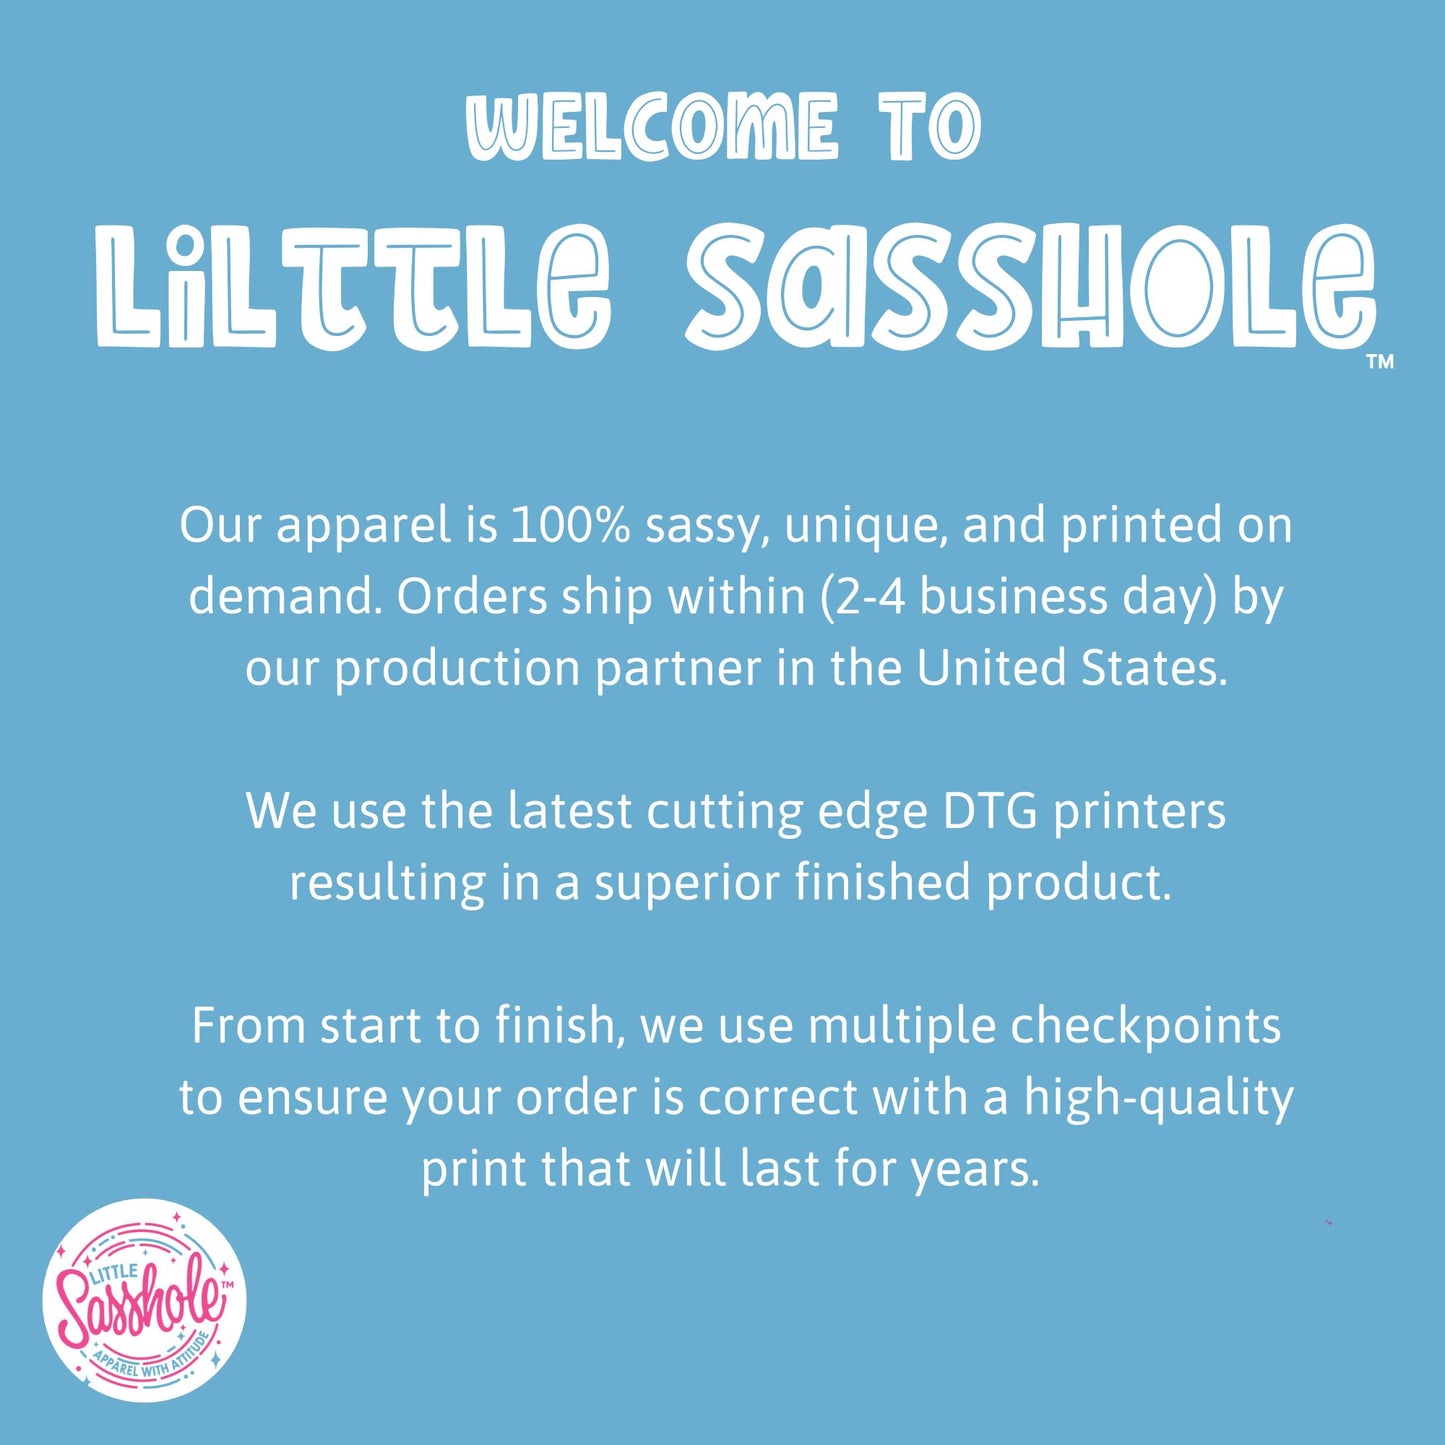 Sparkle Like a Sasshole: Little Sasshole™ Toddler T-Shirt Delight